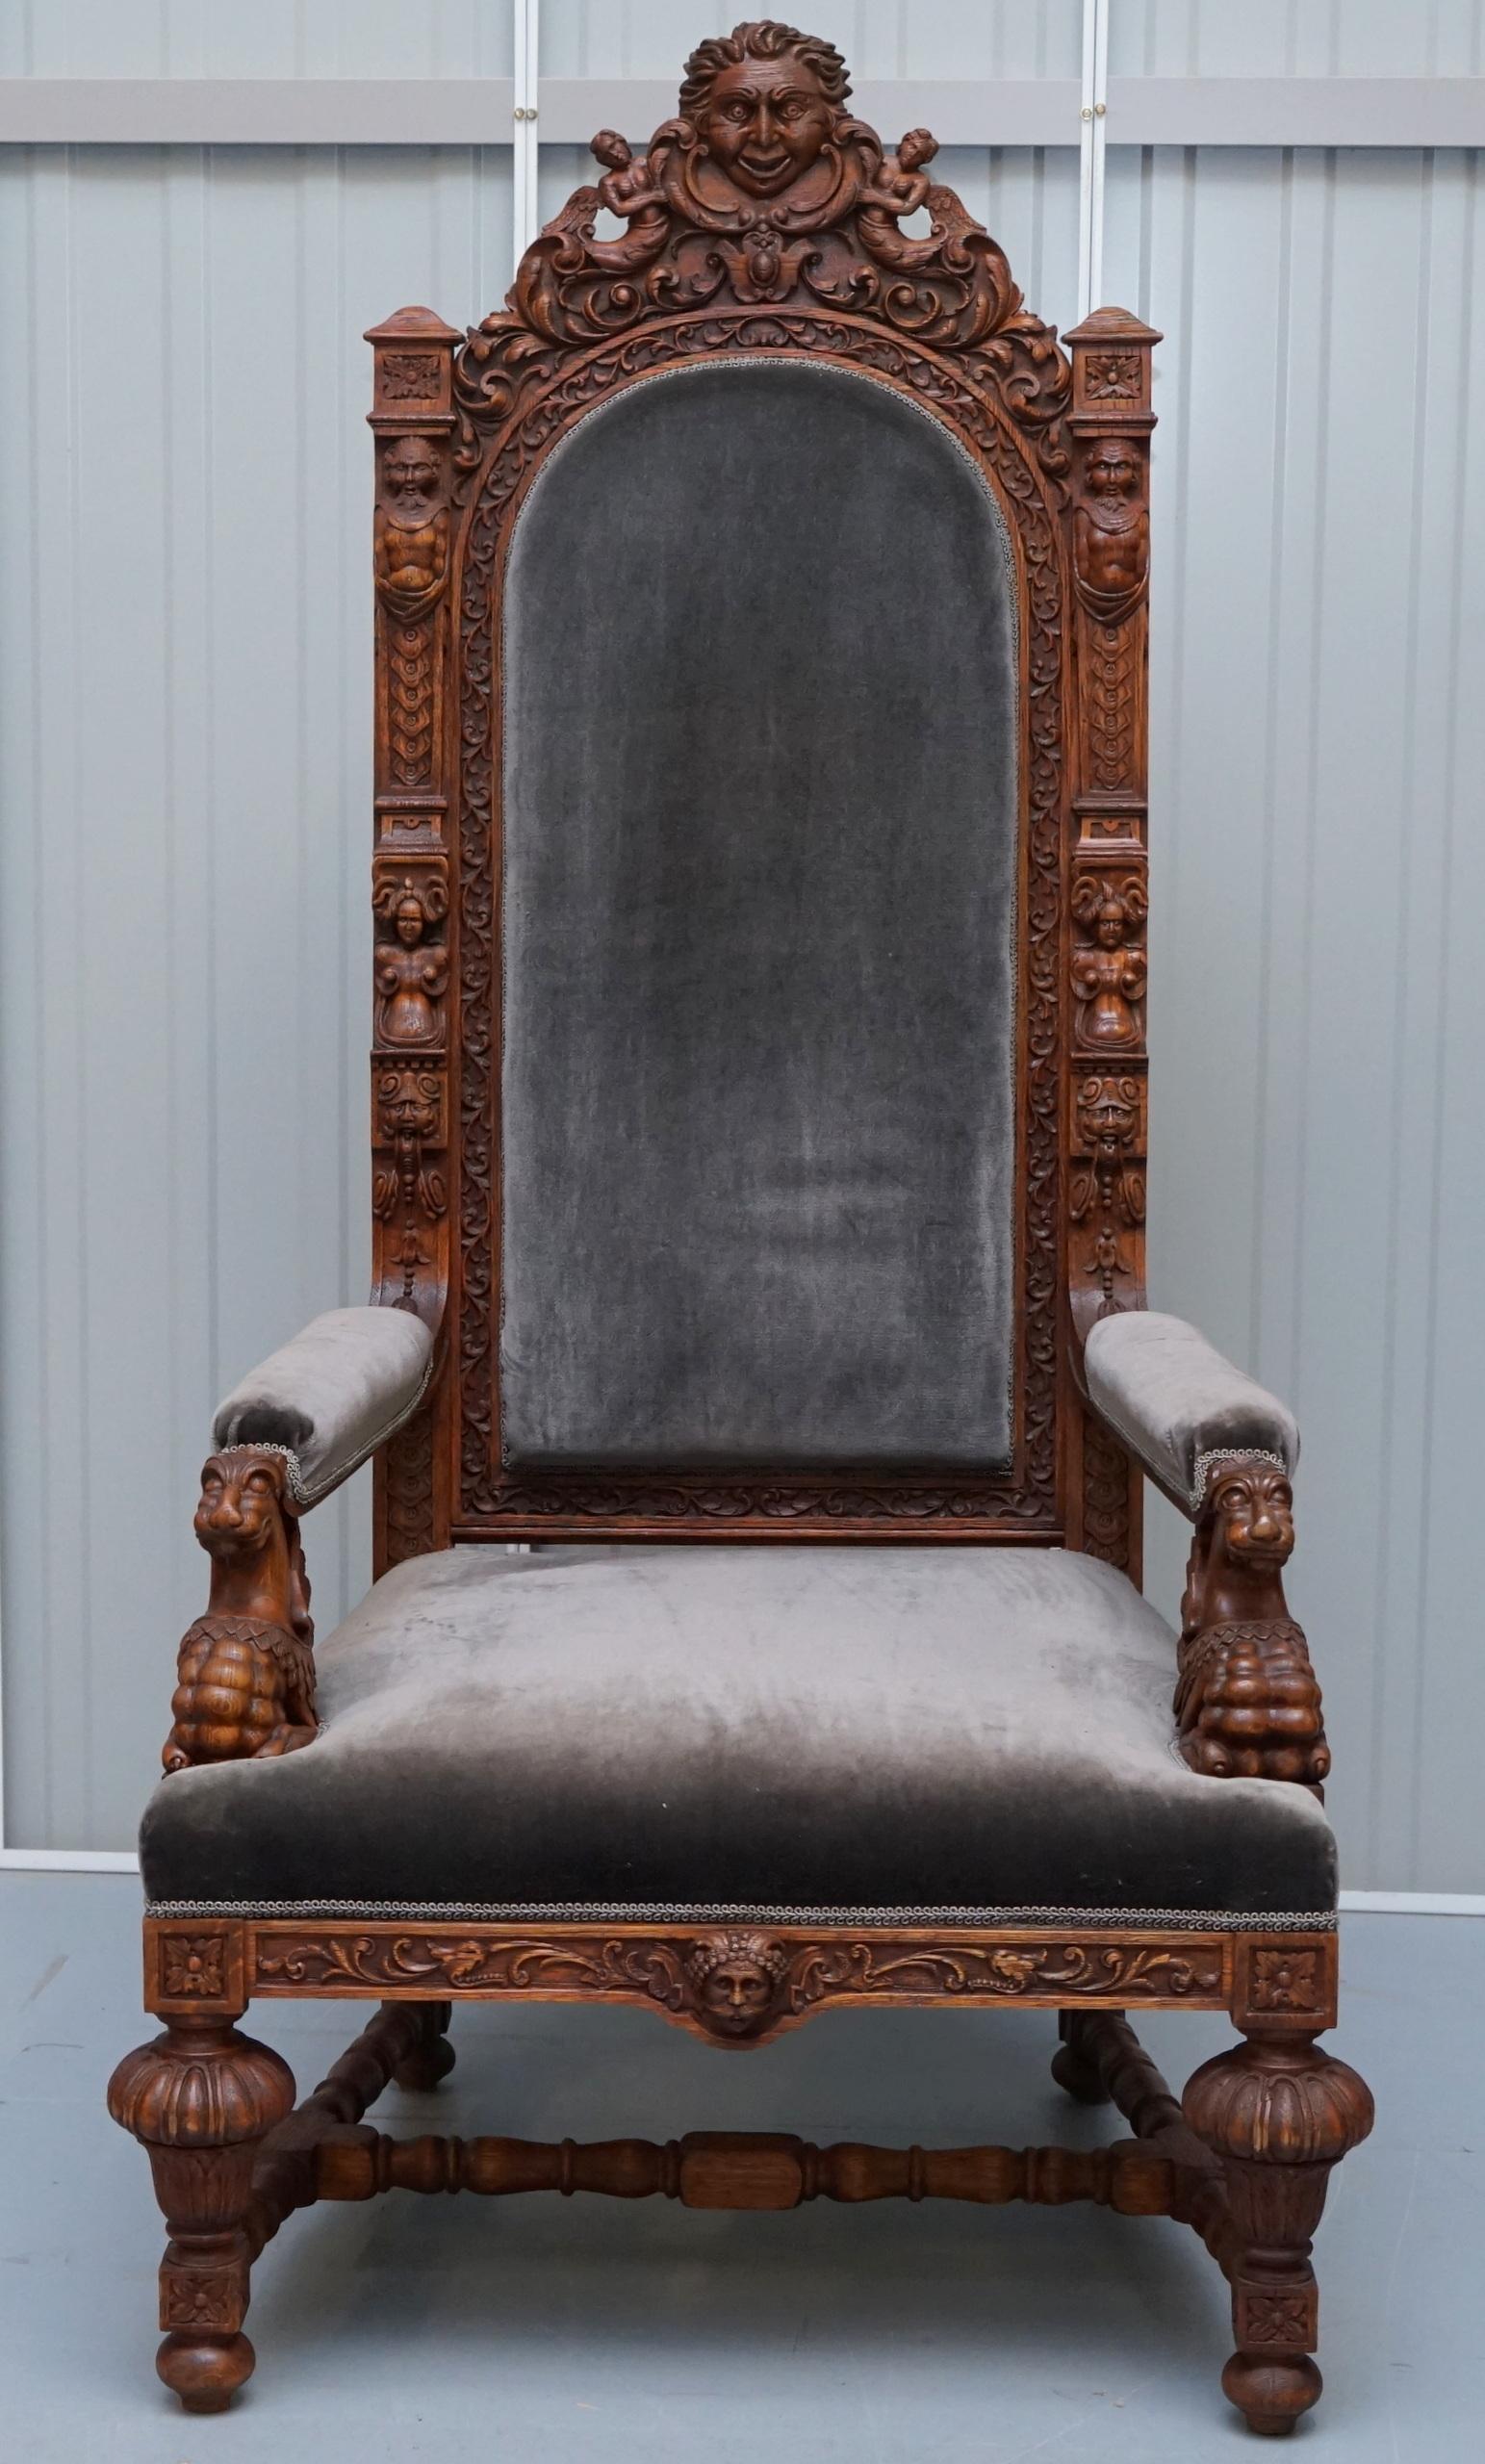 English Pair of Enormous Victorian Jacobean Revival Cherub Putti Carved Throne Armchairs